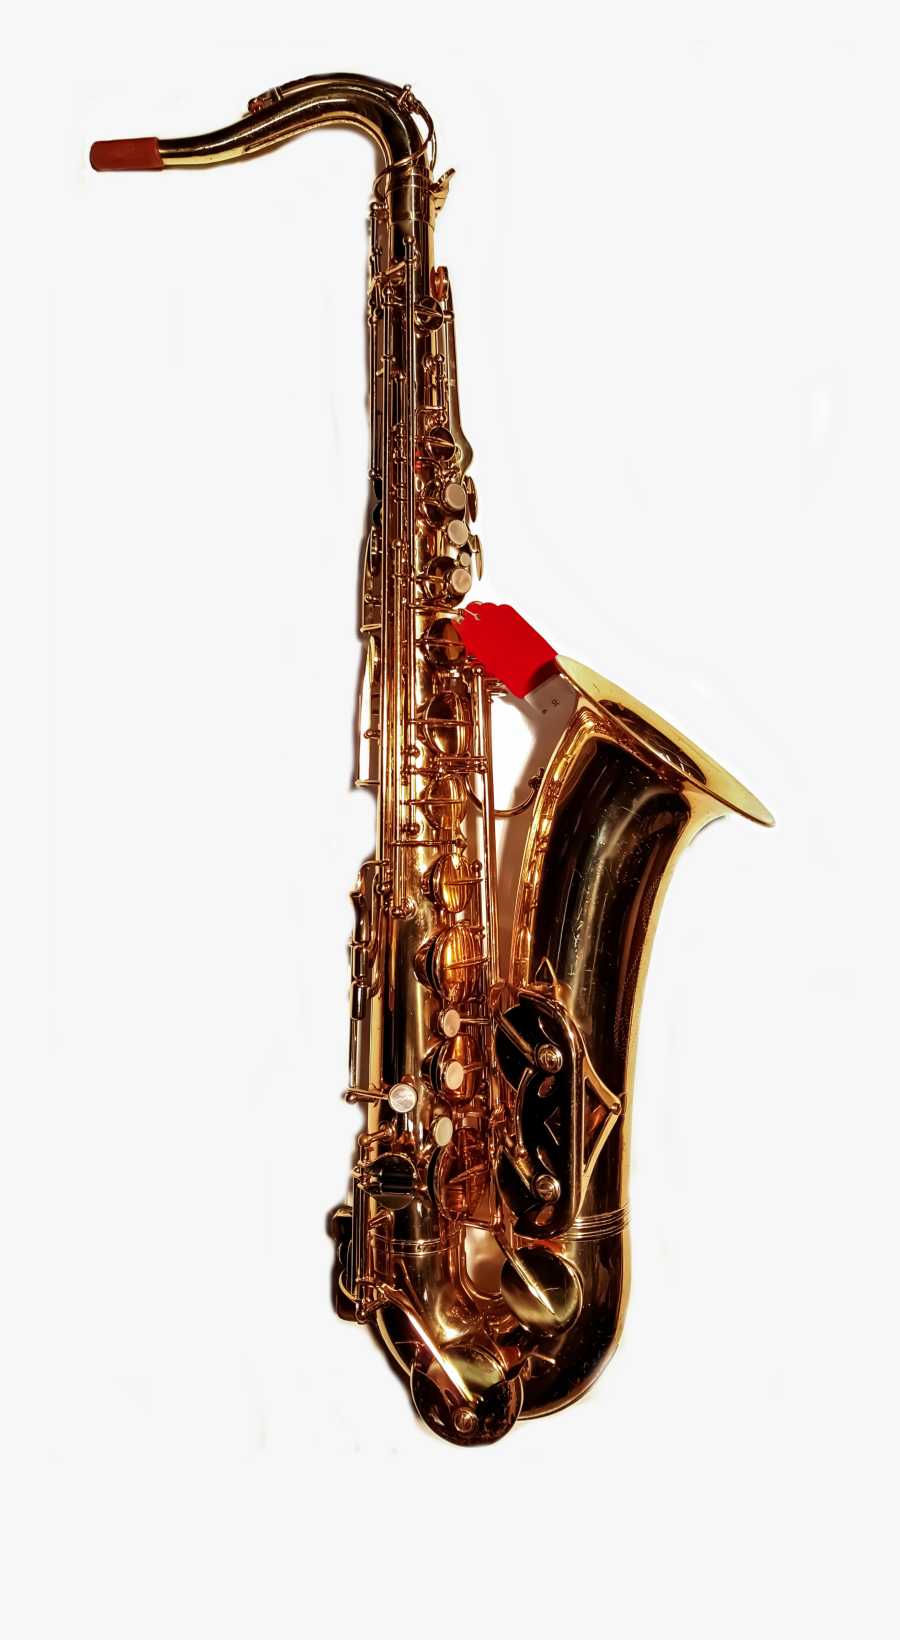 S163361575550162034 P37 I1 W2250 - Baritone Saxophone, Transparent Clipart